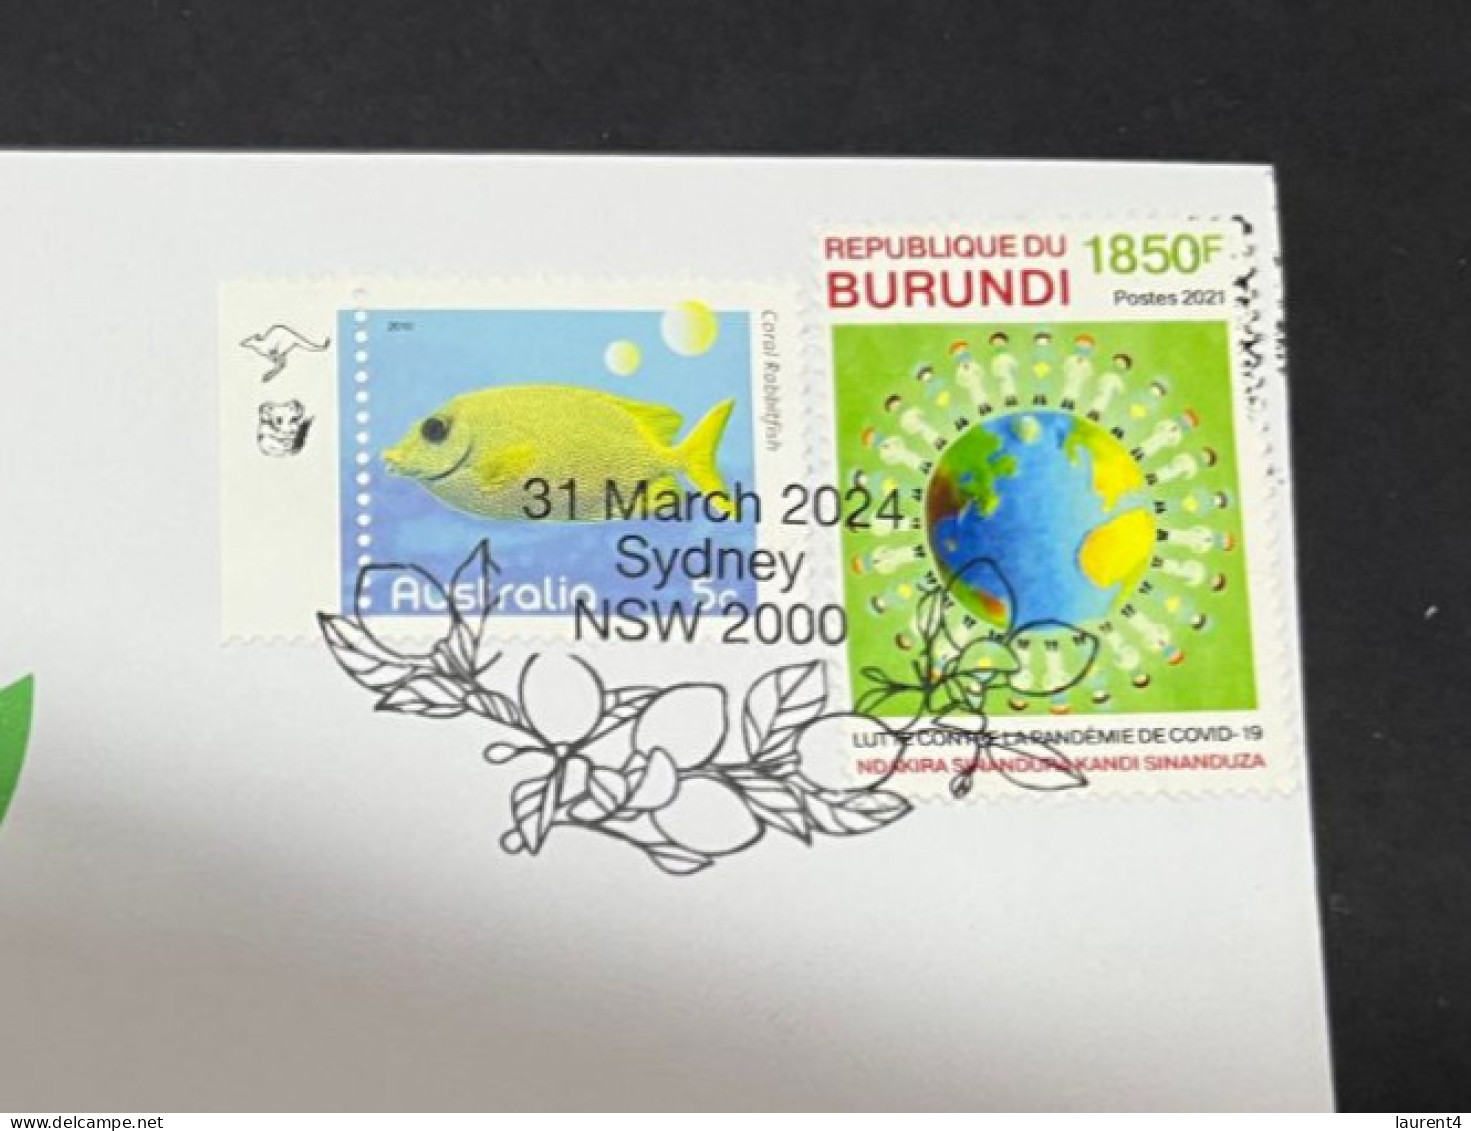 31-3-2024 (4 Y 33) COVID-19 4th Anniversary - Burundi - 31 March 2024 (with Burundi COVID-19 Stamp) - Disease